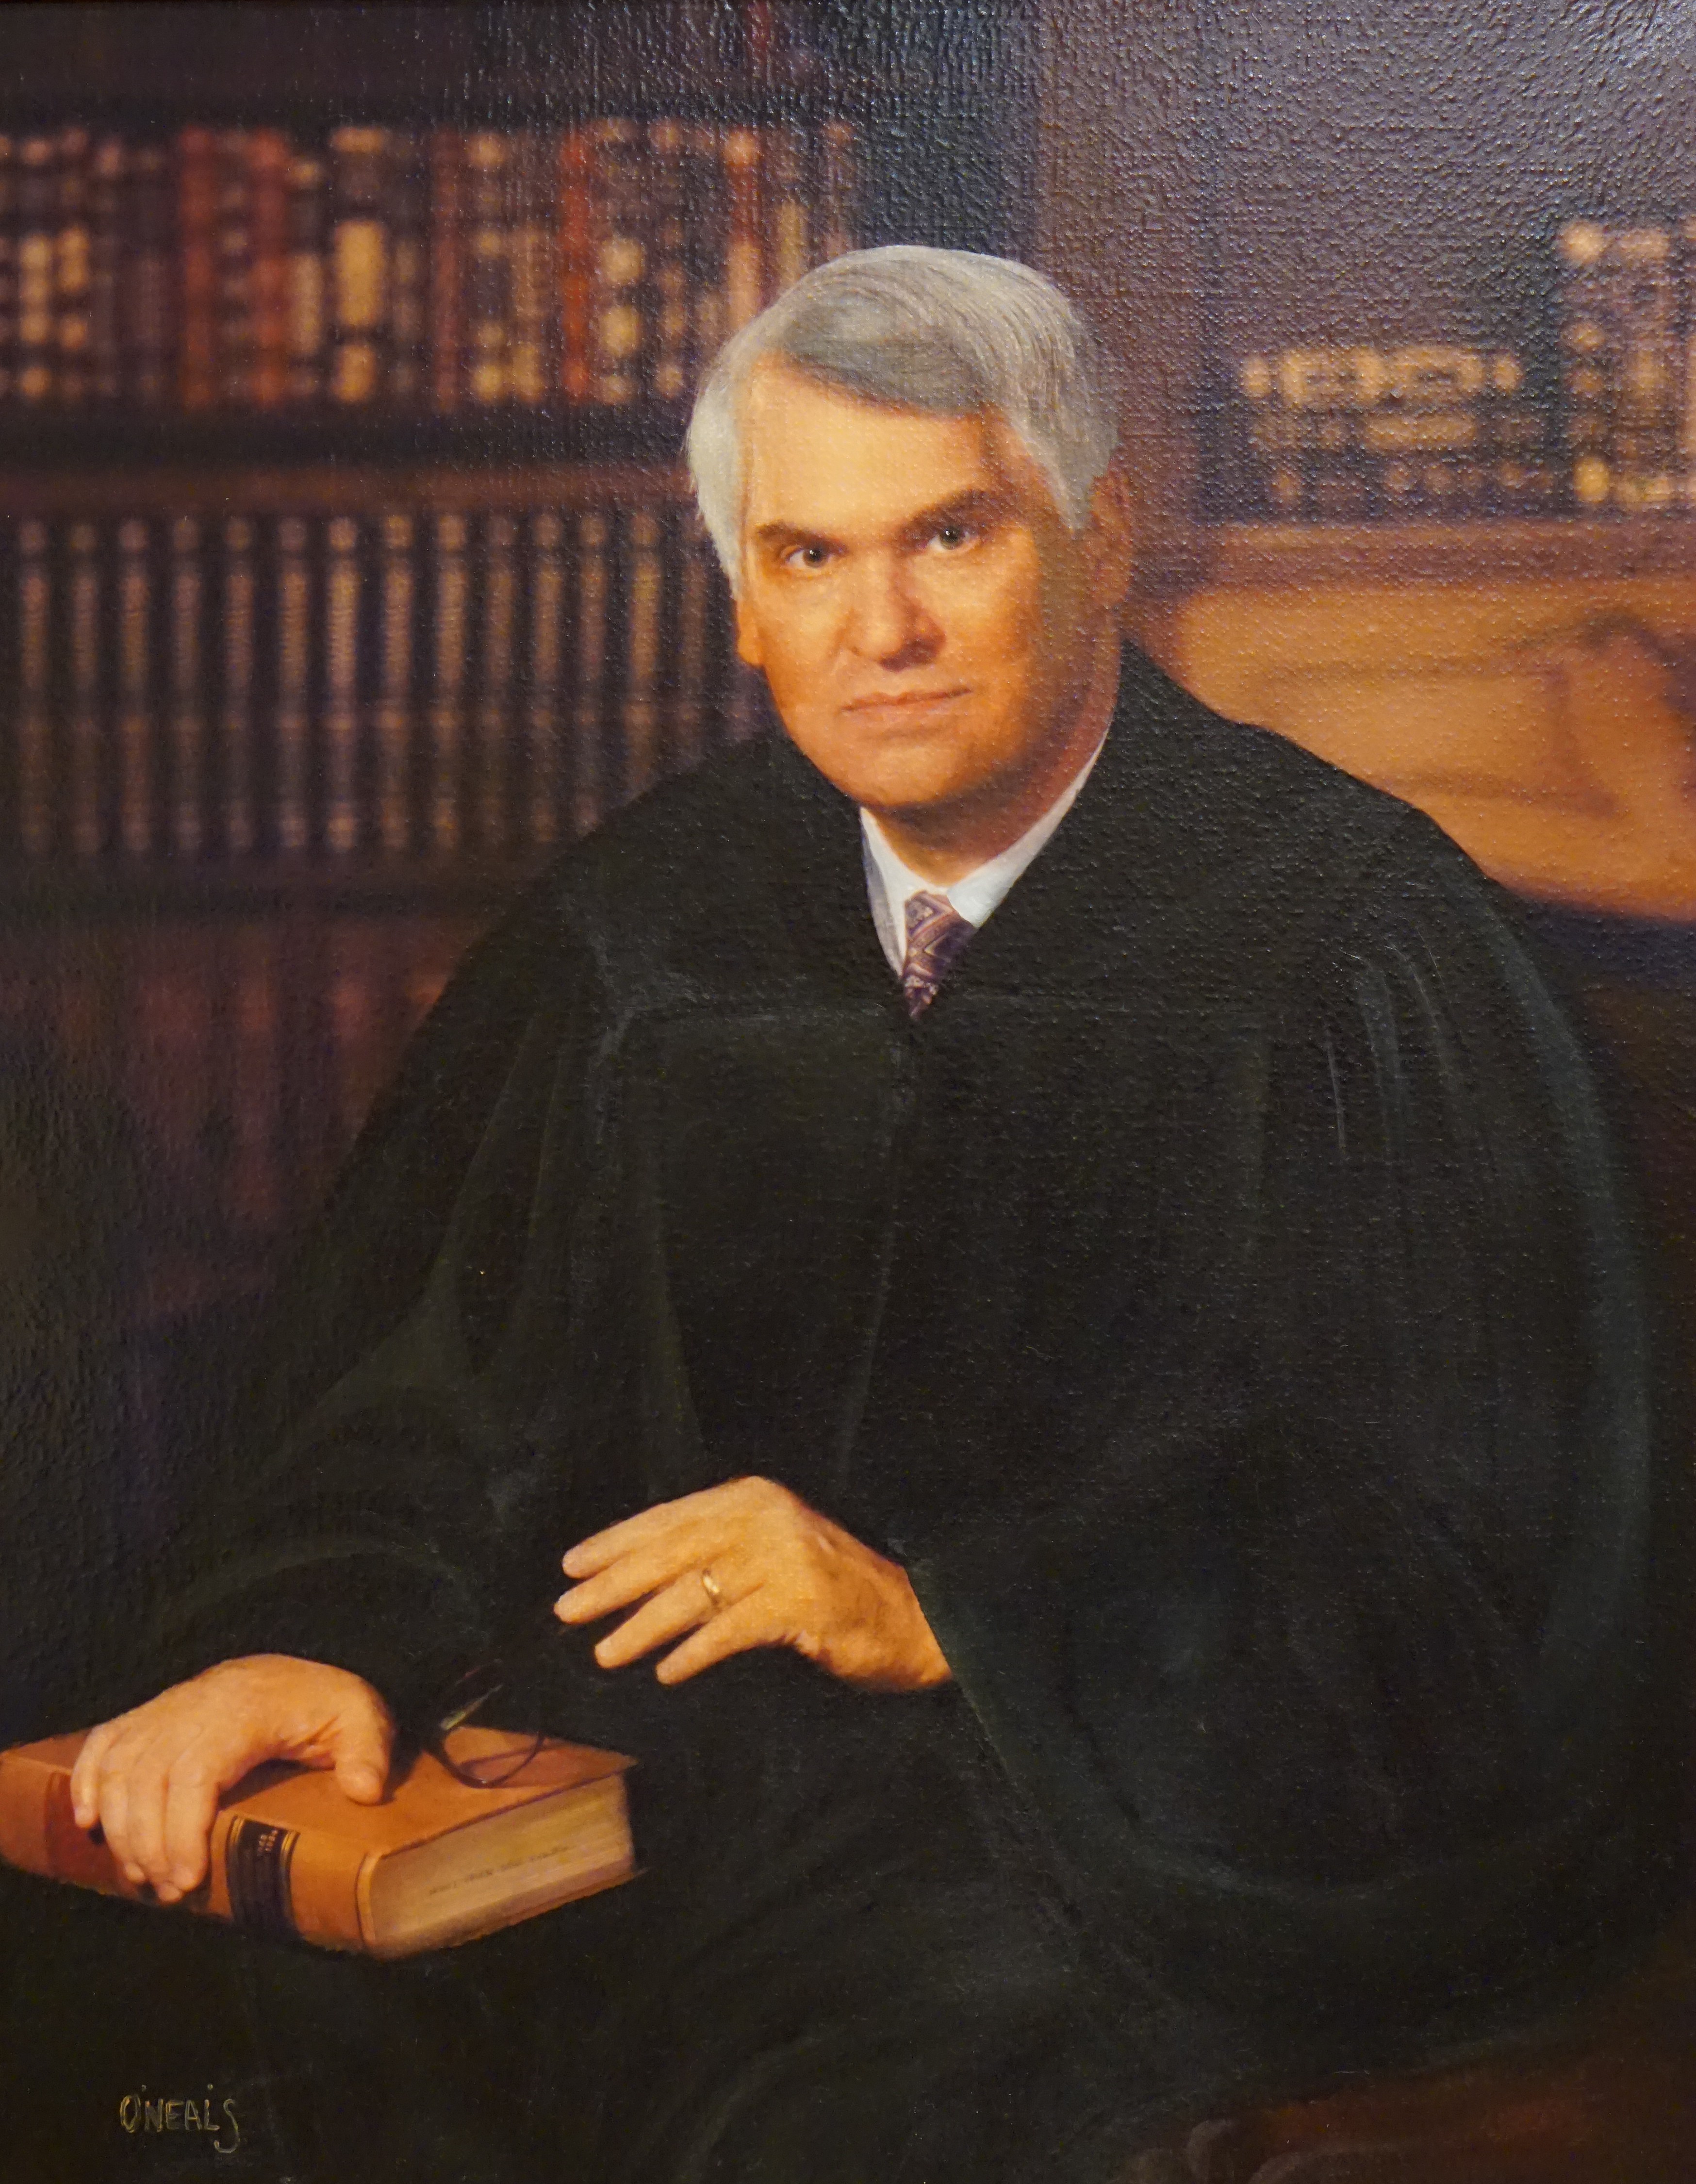 Judge Robert P. Frank